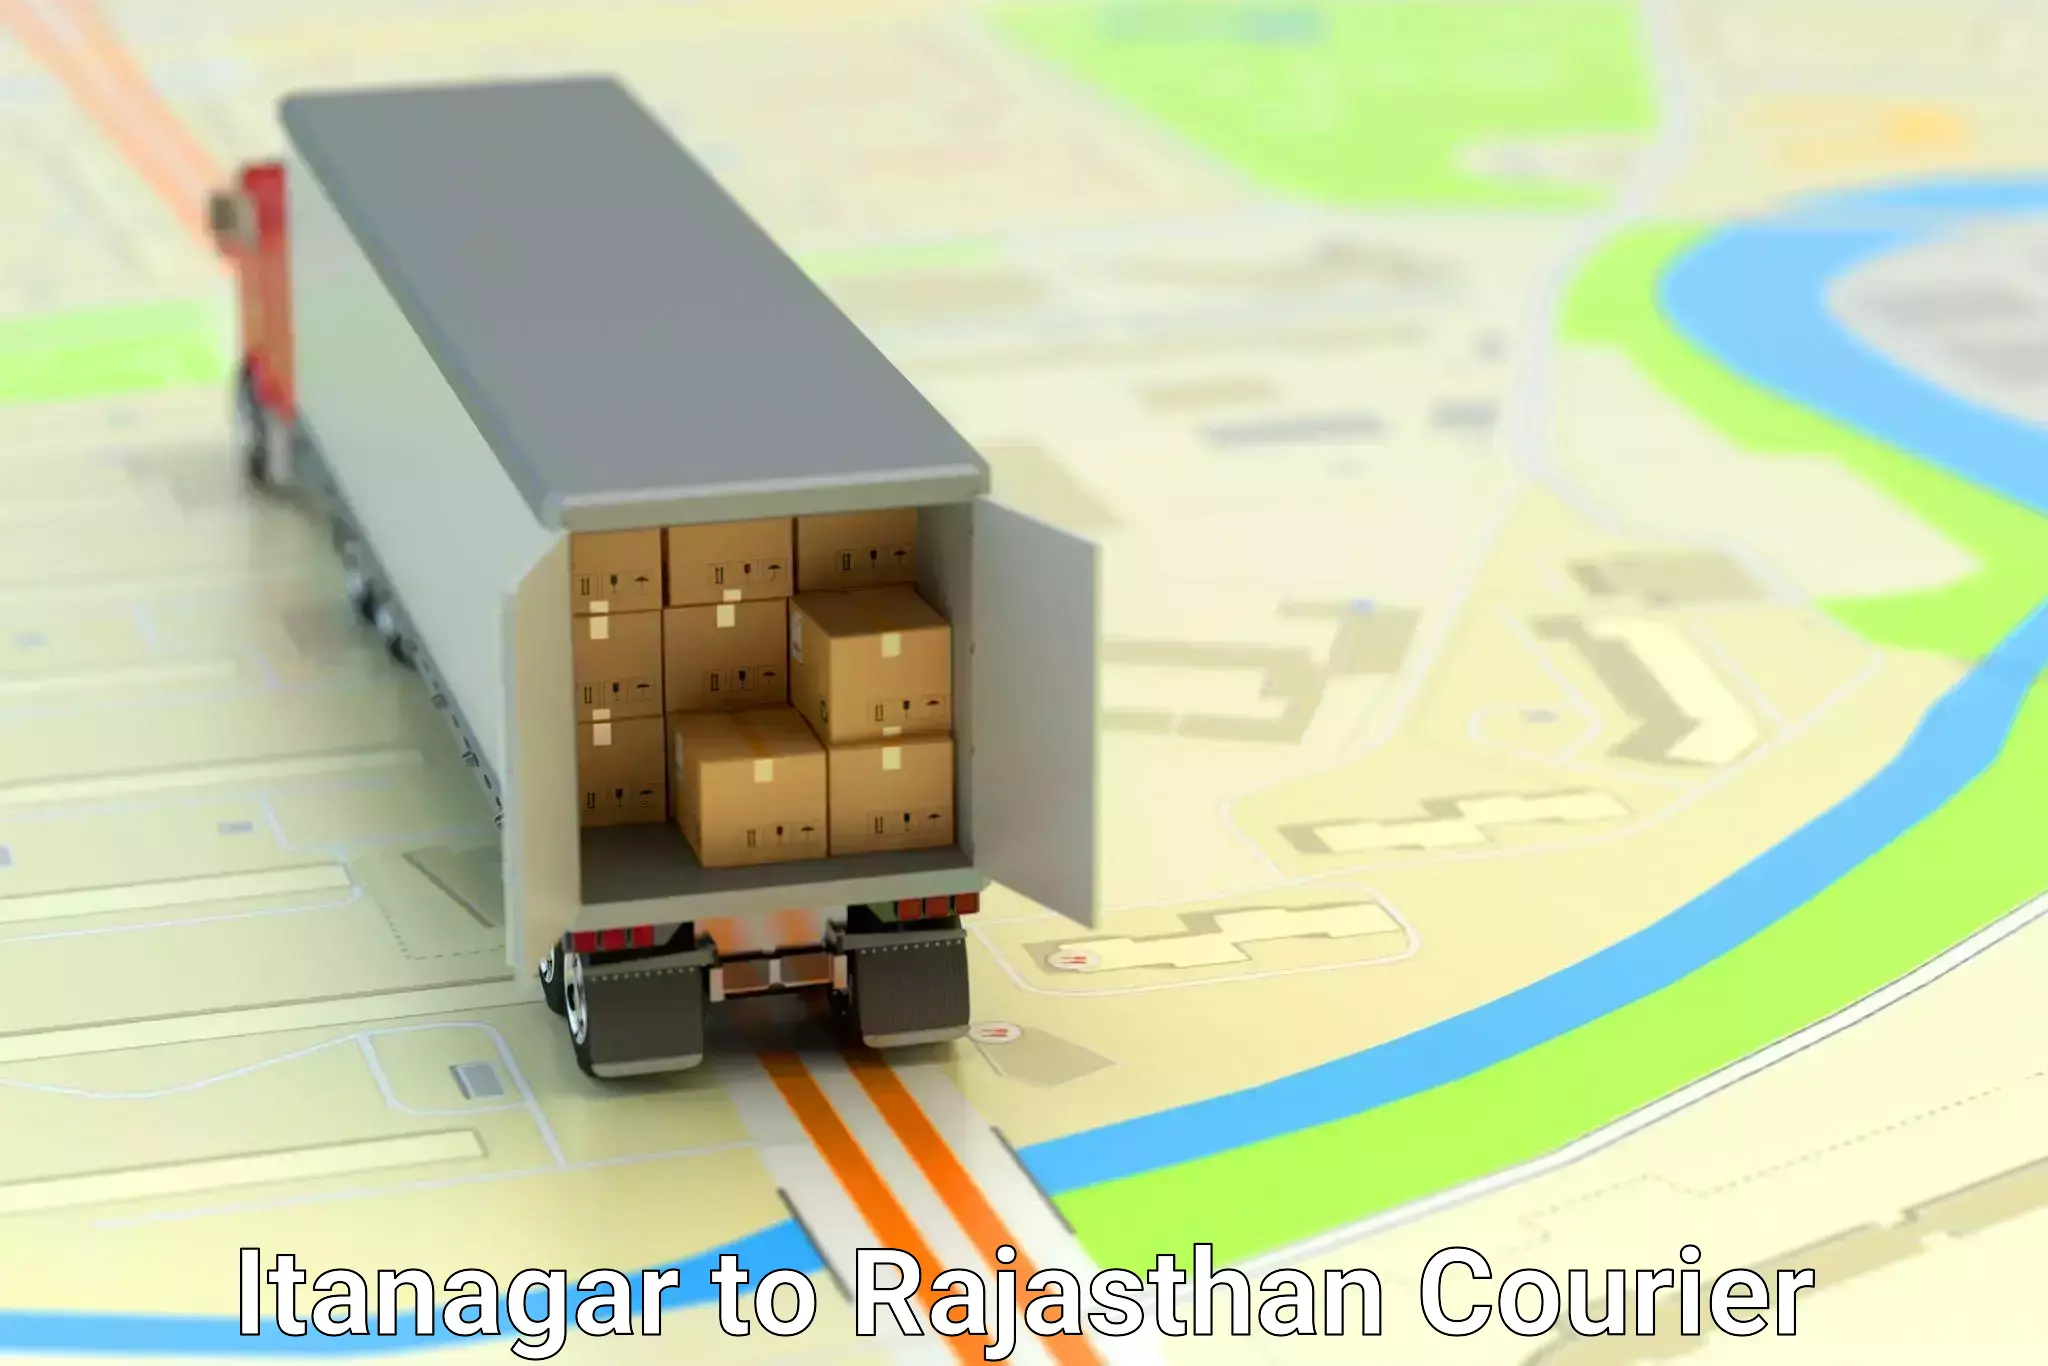 Smart logistics strategies Itanagar to Pokhran